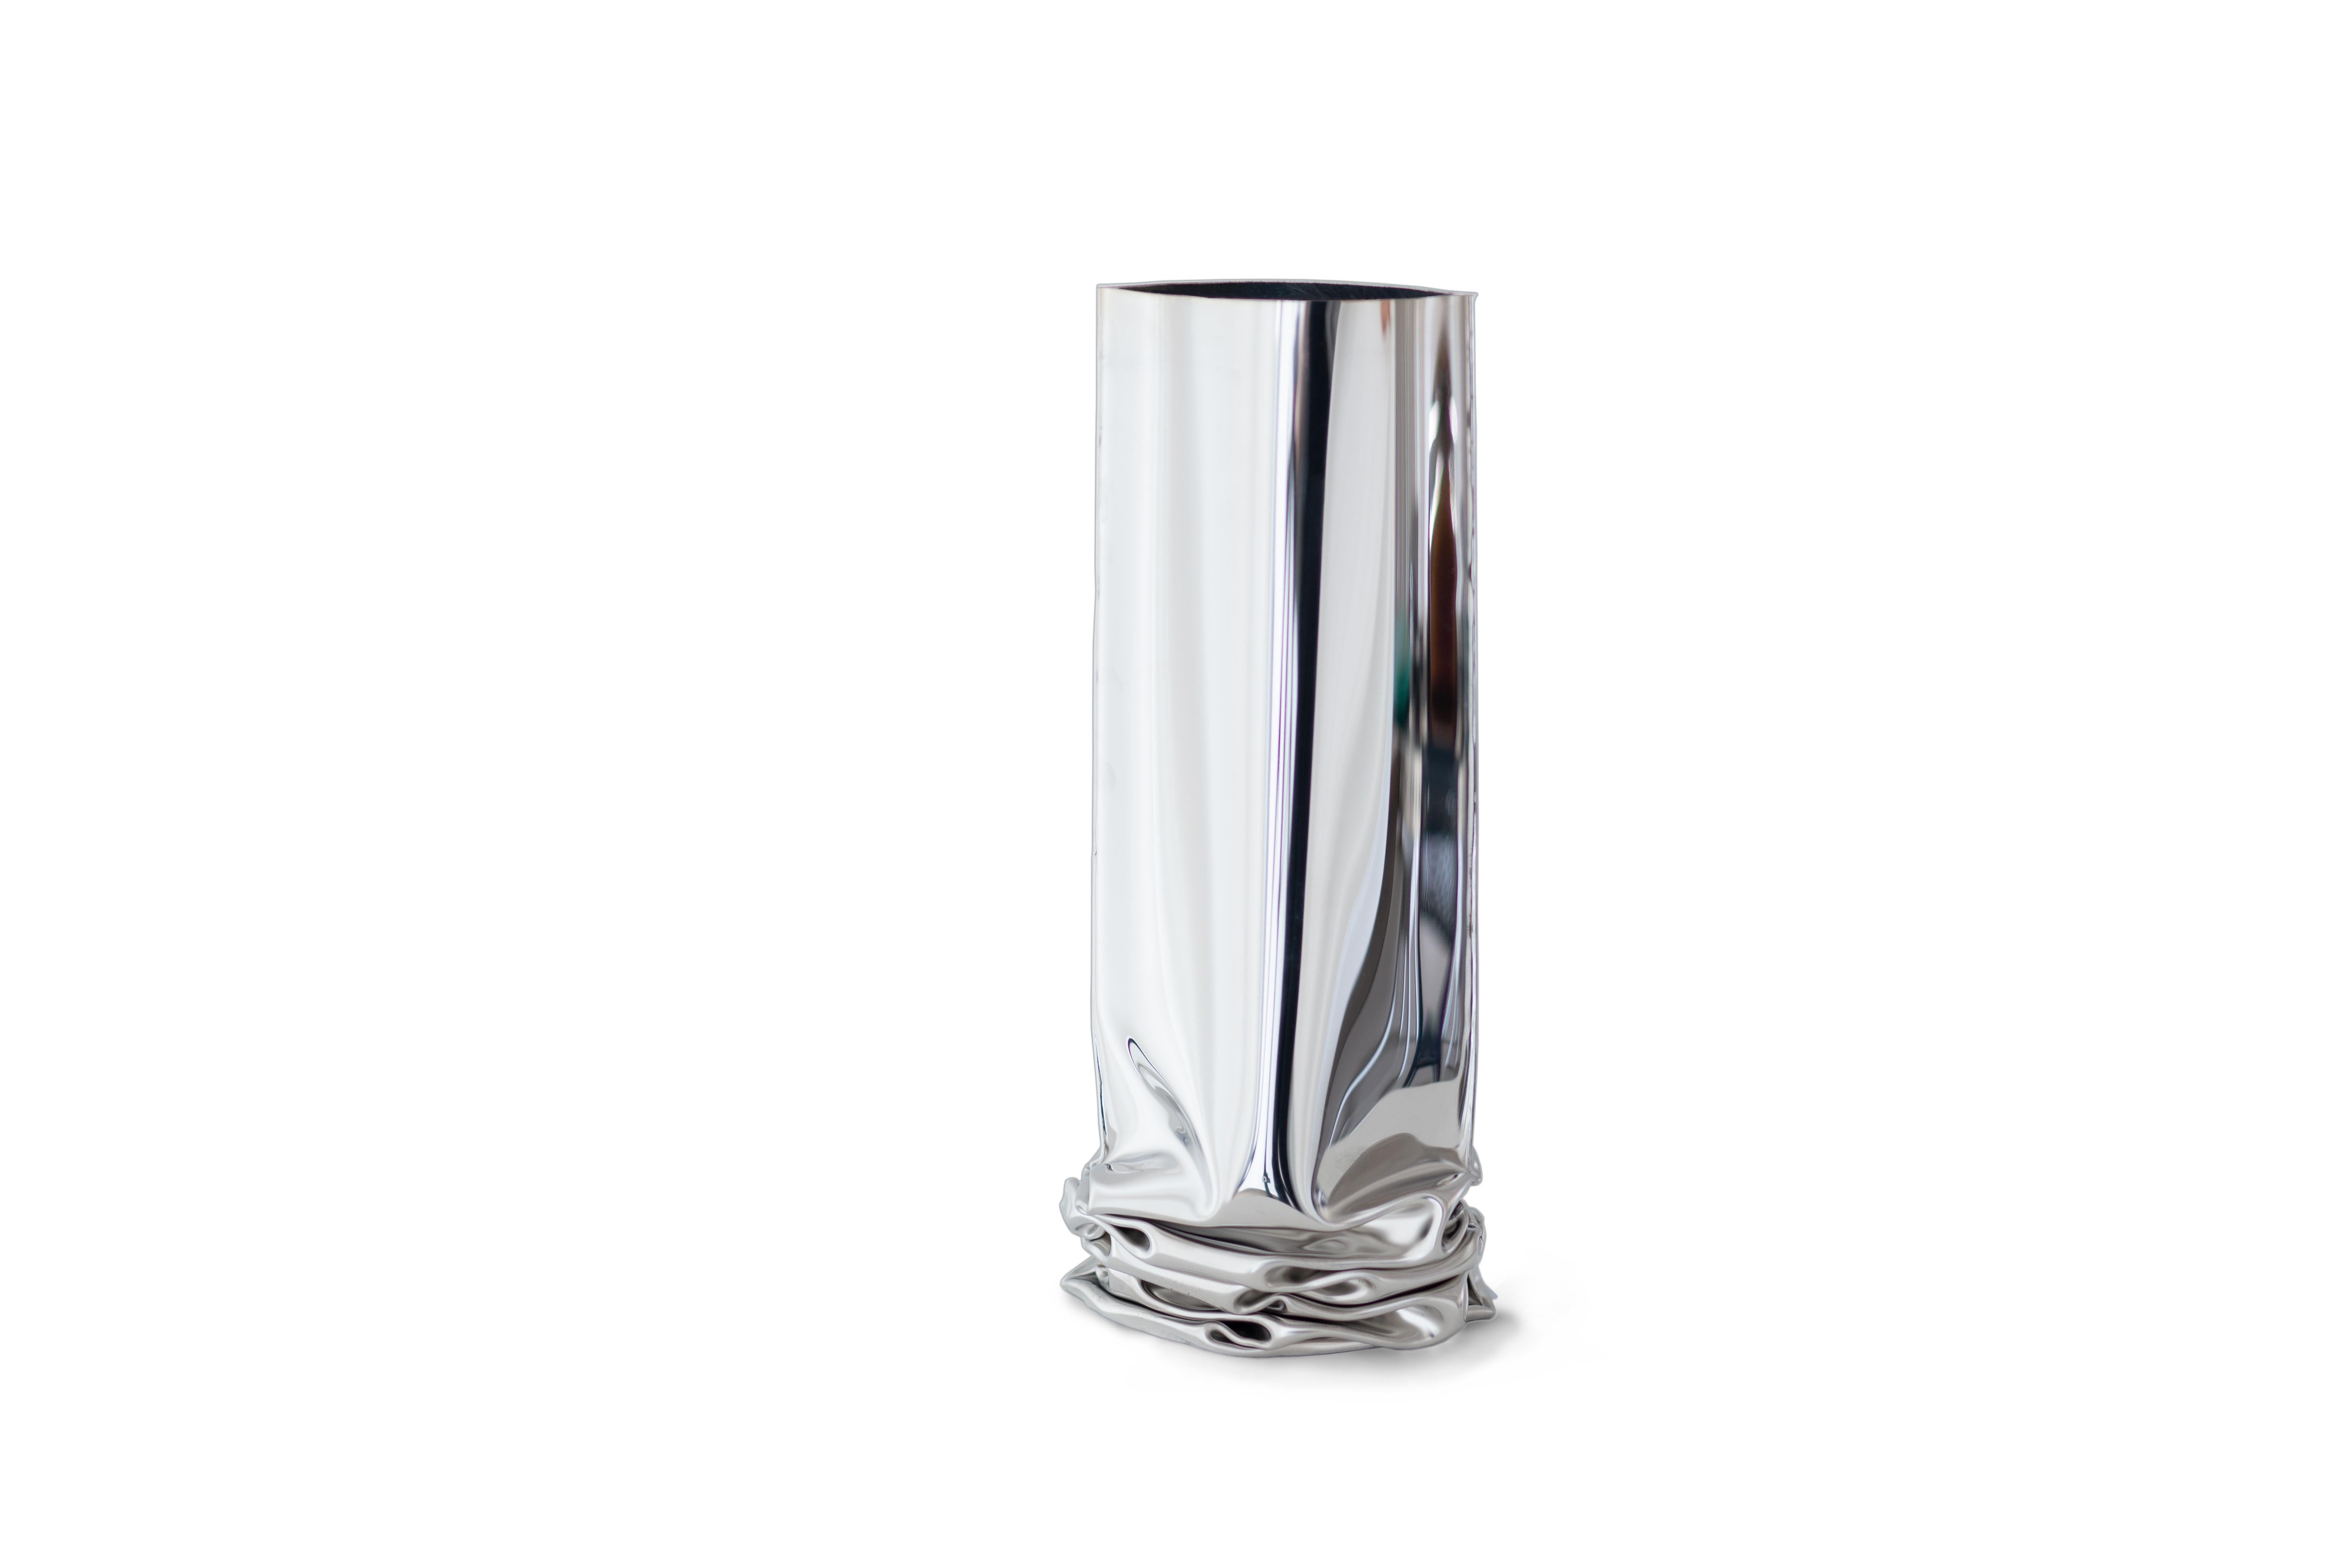 Organic Modern Contemporary Vase, 'Crash Vase' by Zieta, Medium, Stainless Steel For Sale